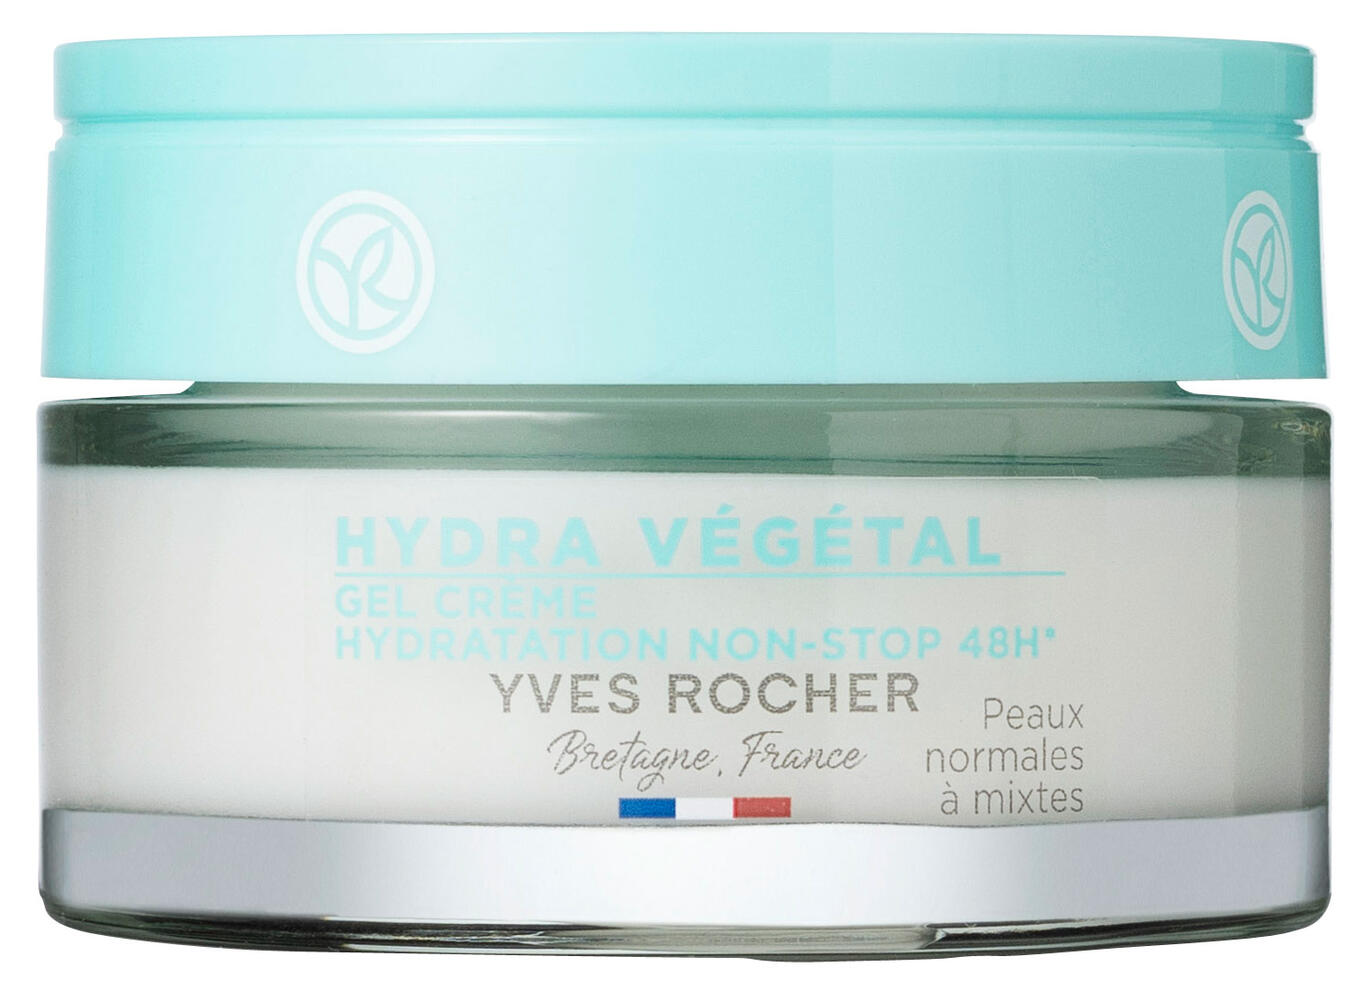 48H non-stop moisturizing gel cream Yves Rocher